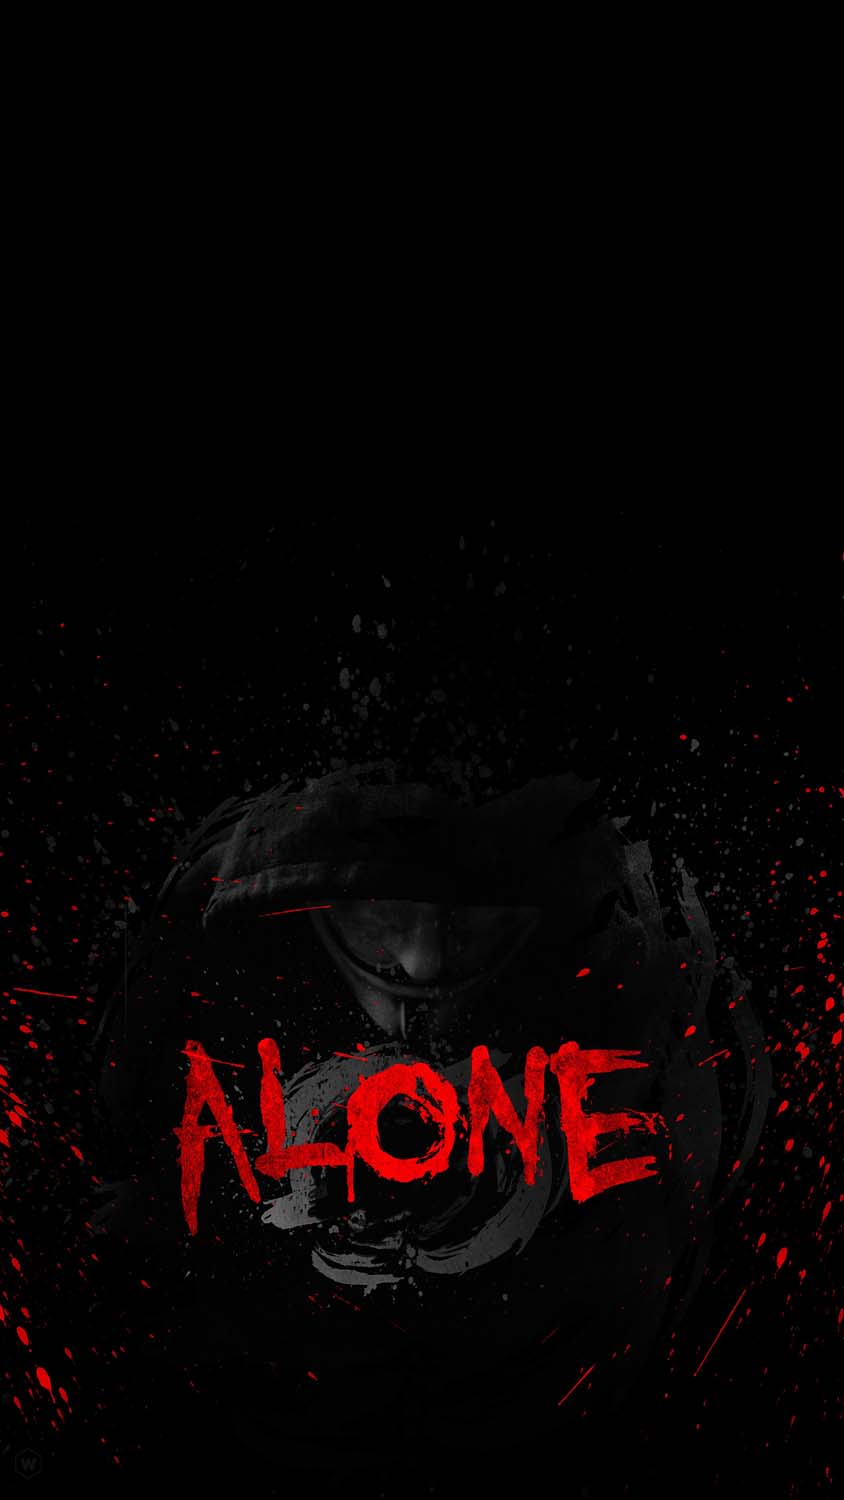 Alone in Dark iPhone Wallpaper HD  iPhone Wallpapers